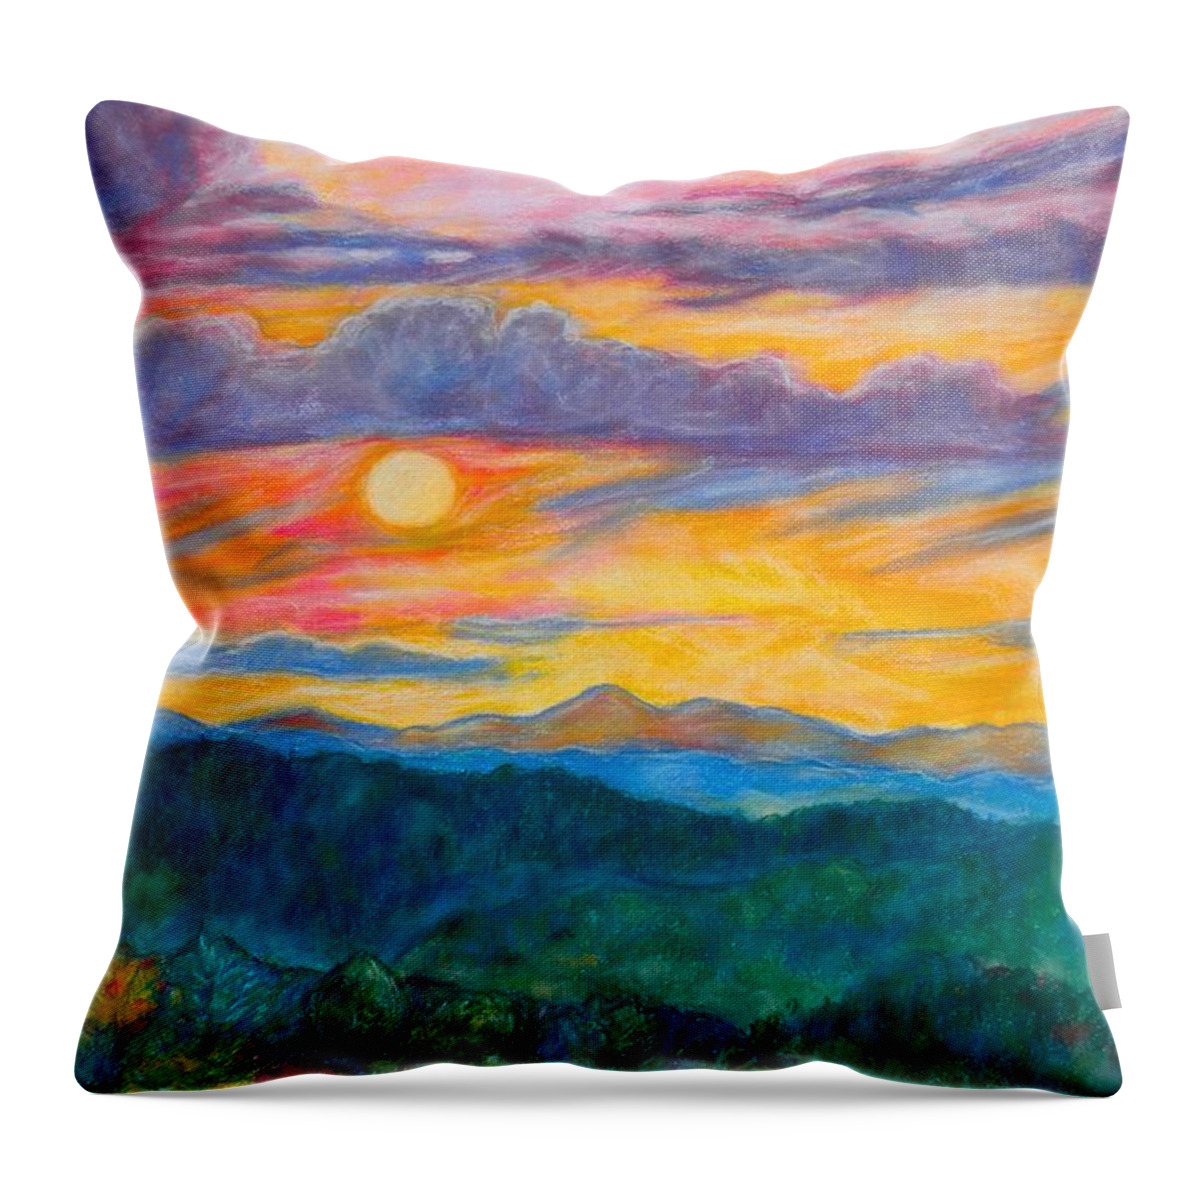 Landscape Throw Pillow featuring the painting Golden Blue Ridge Sunset by Kendall Kessler